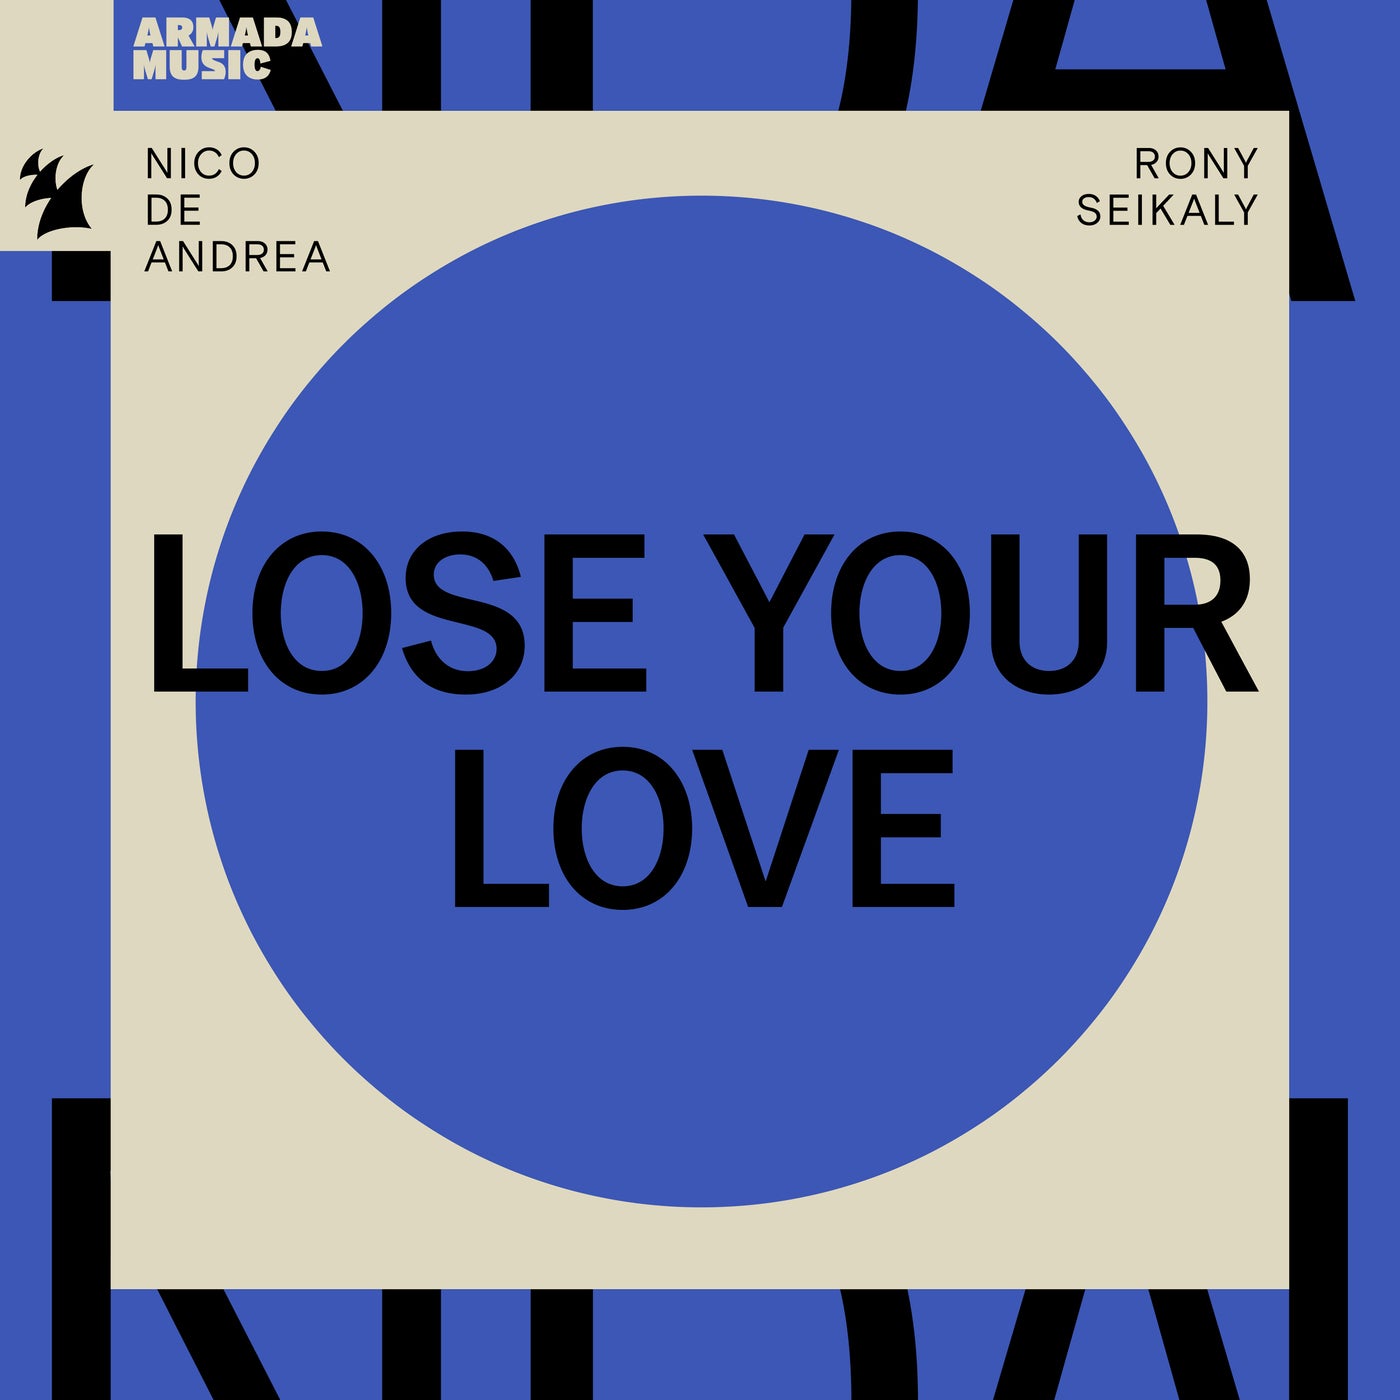 image cover: Rony Seikaly, Nico de Andrea - Lose Your Love on Armada Music